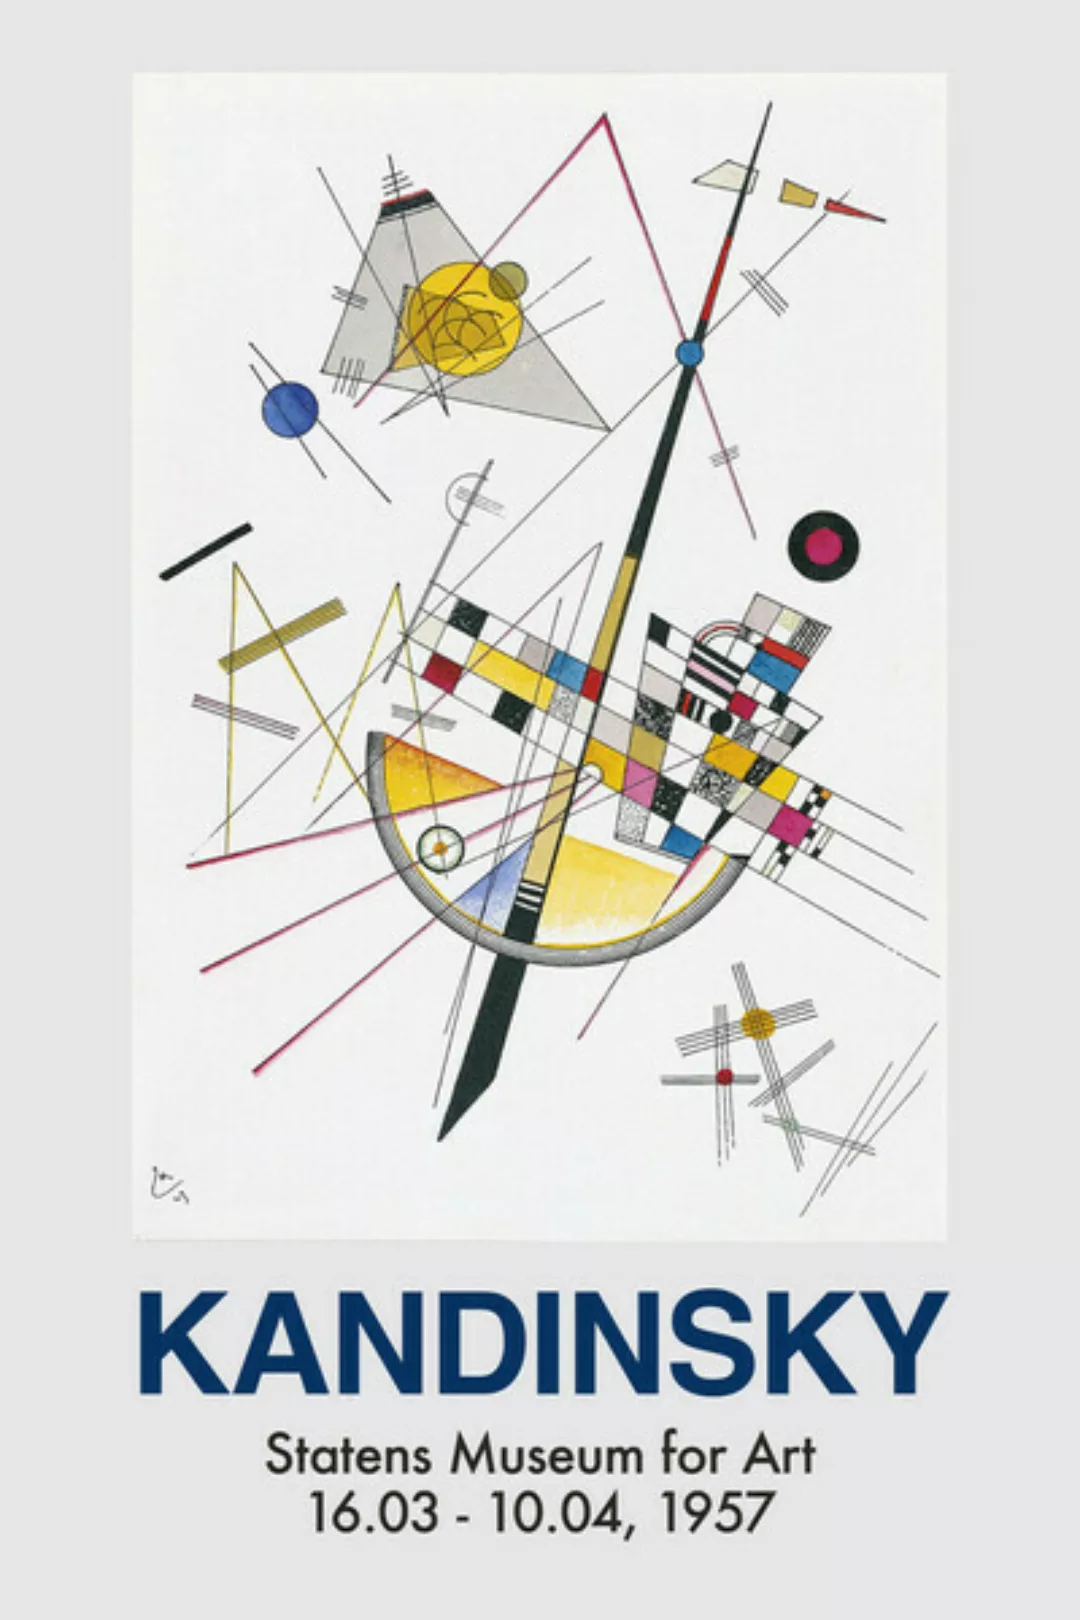 Poster / Leinwandbild - Kandinsky Ausstellungsposter günstig online kaufen